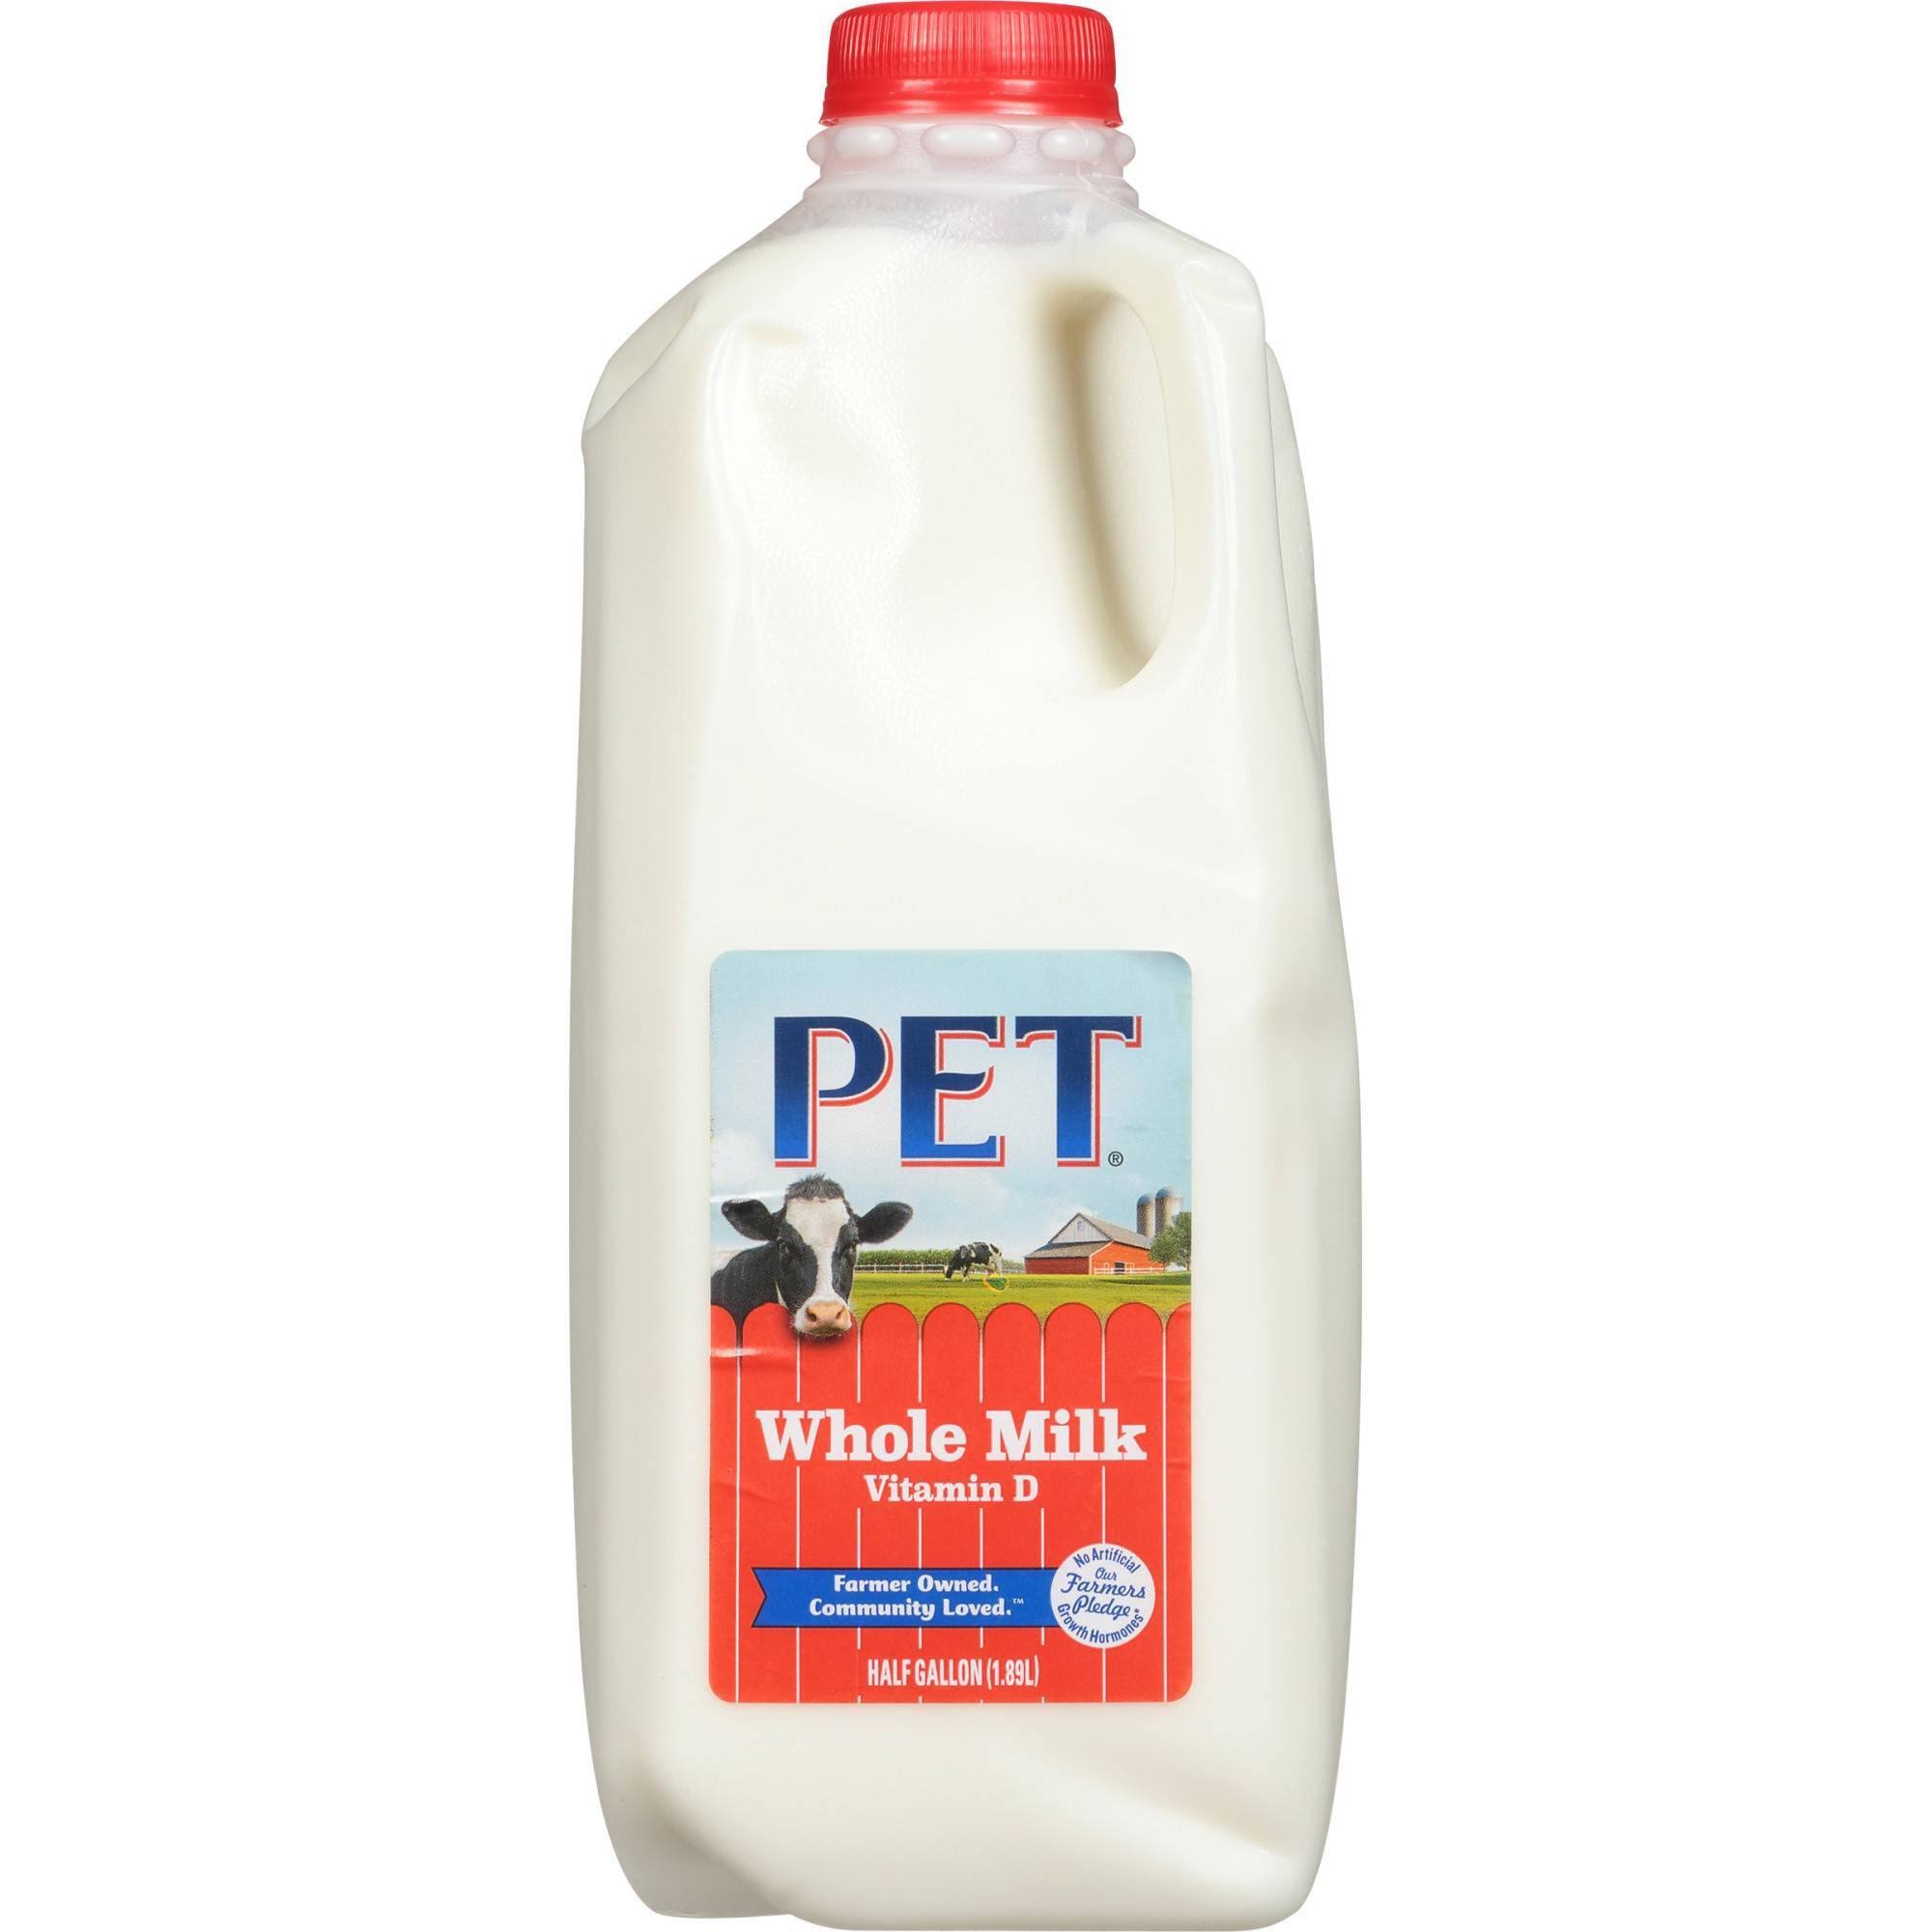 Pet Whole Milk - half gallon (1.89 l)